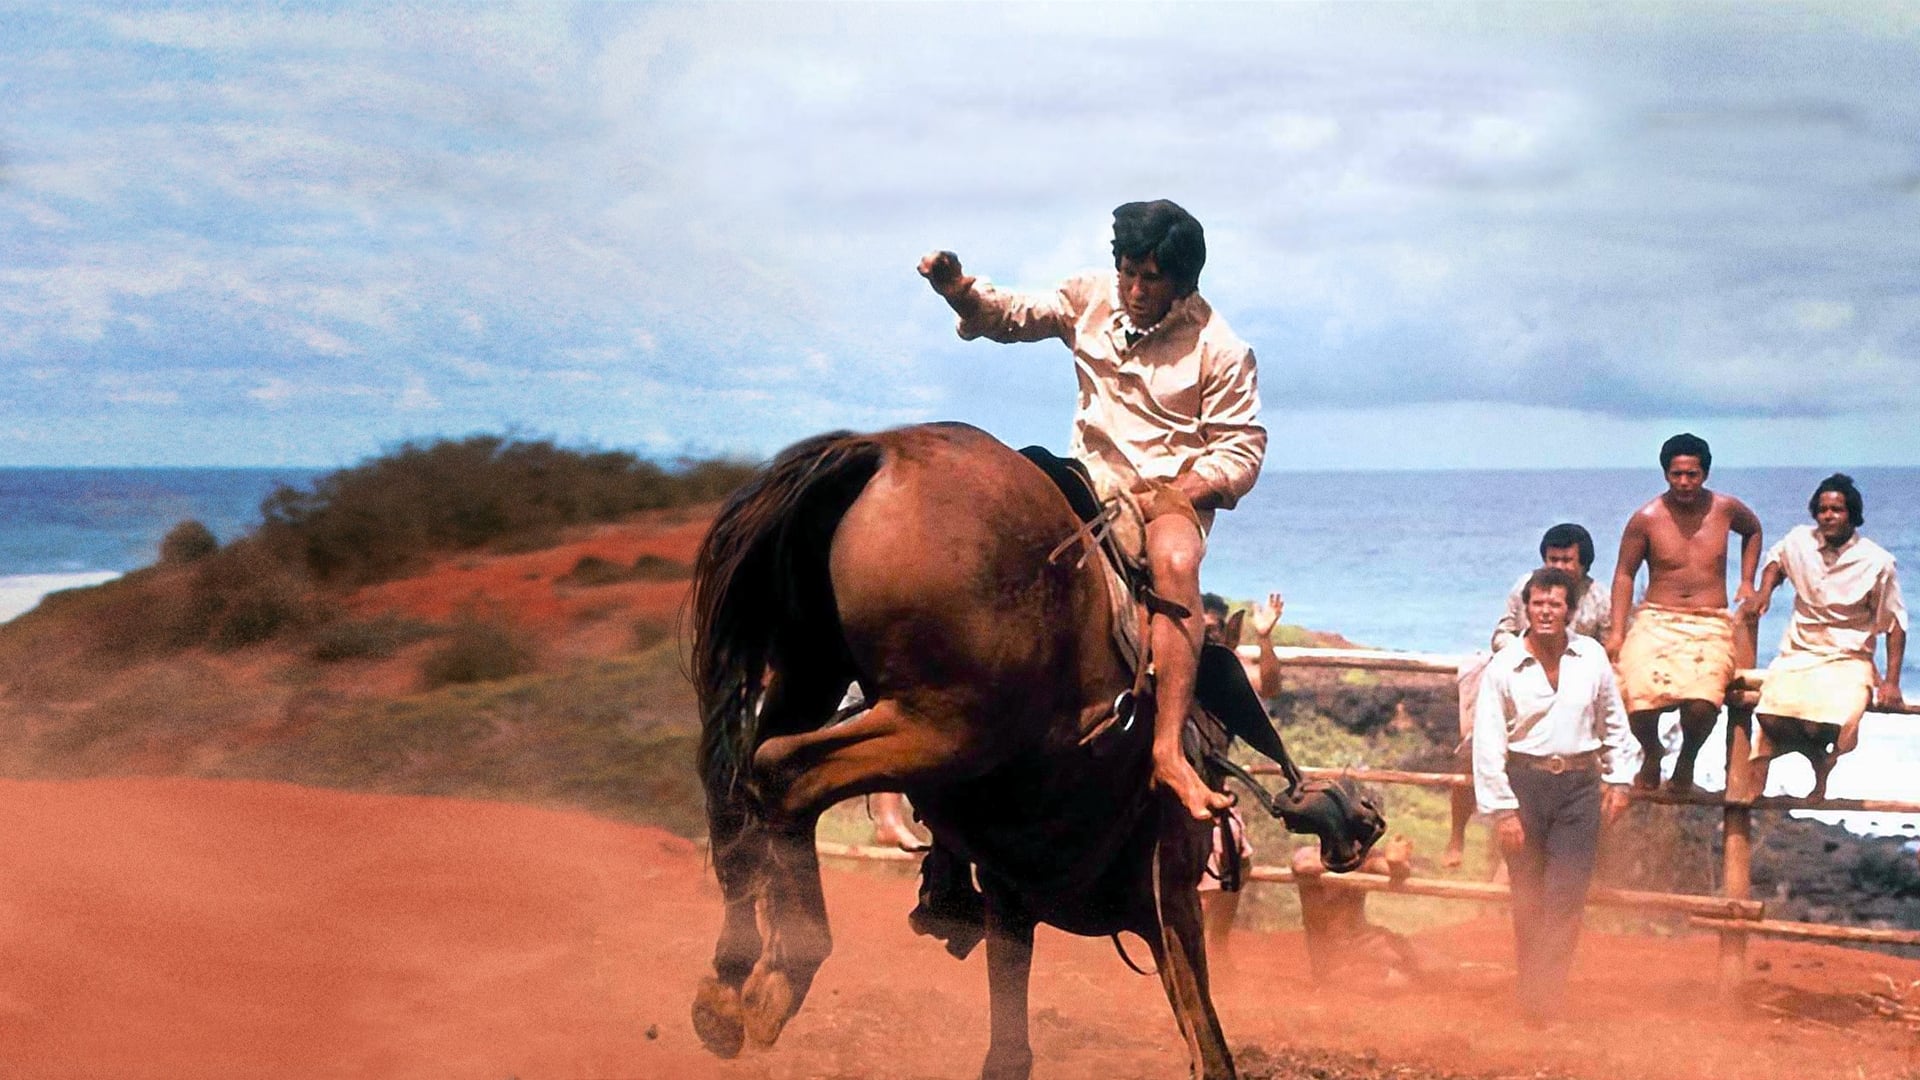 A partra vetett cowboy (1974)